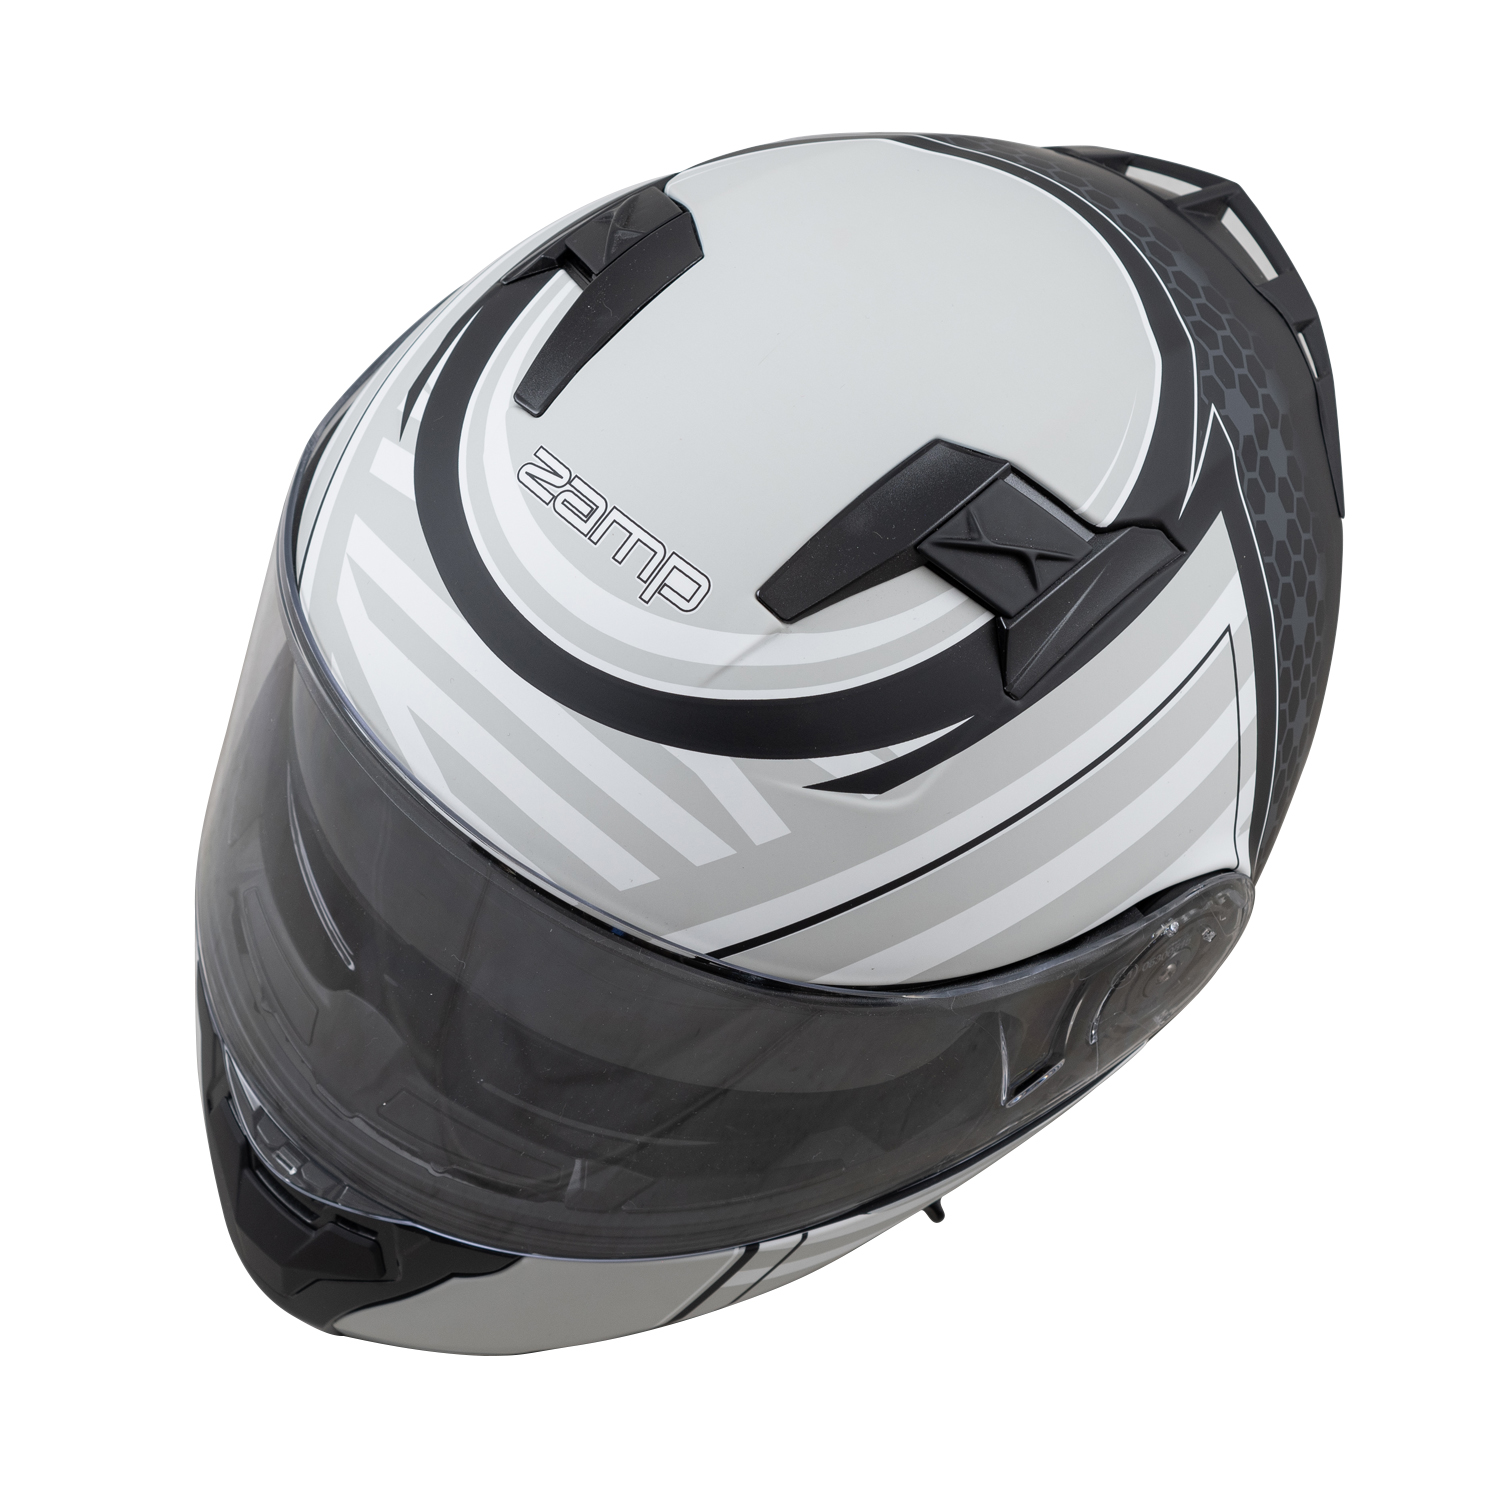 FL-4 Matte Gray Graphic Helmet